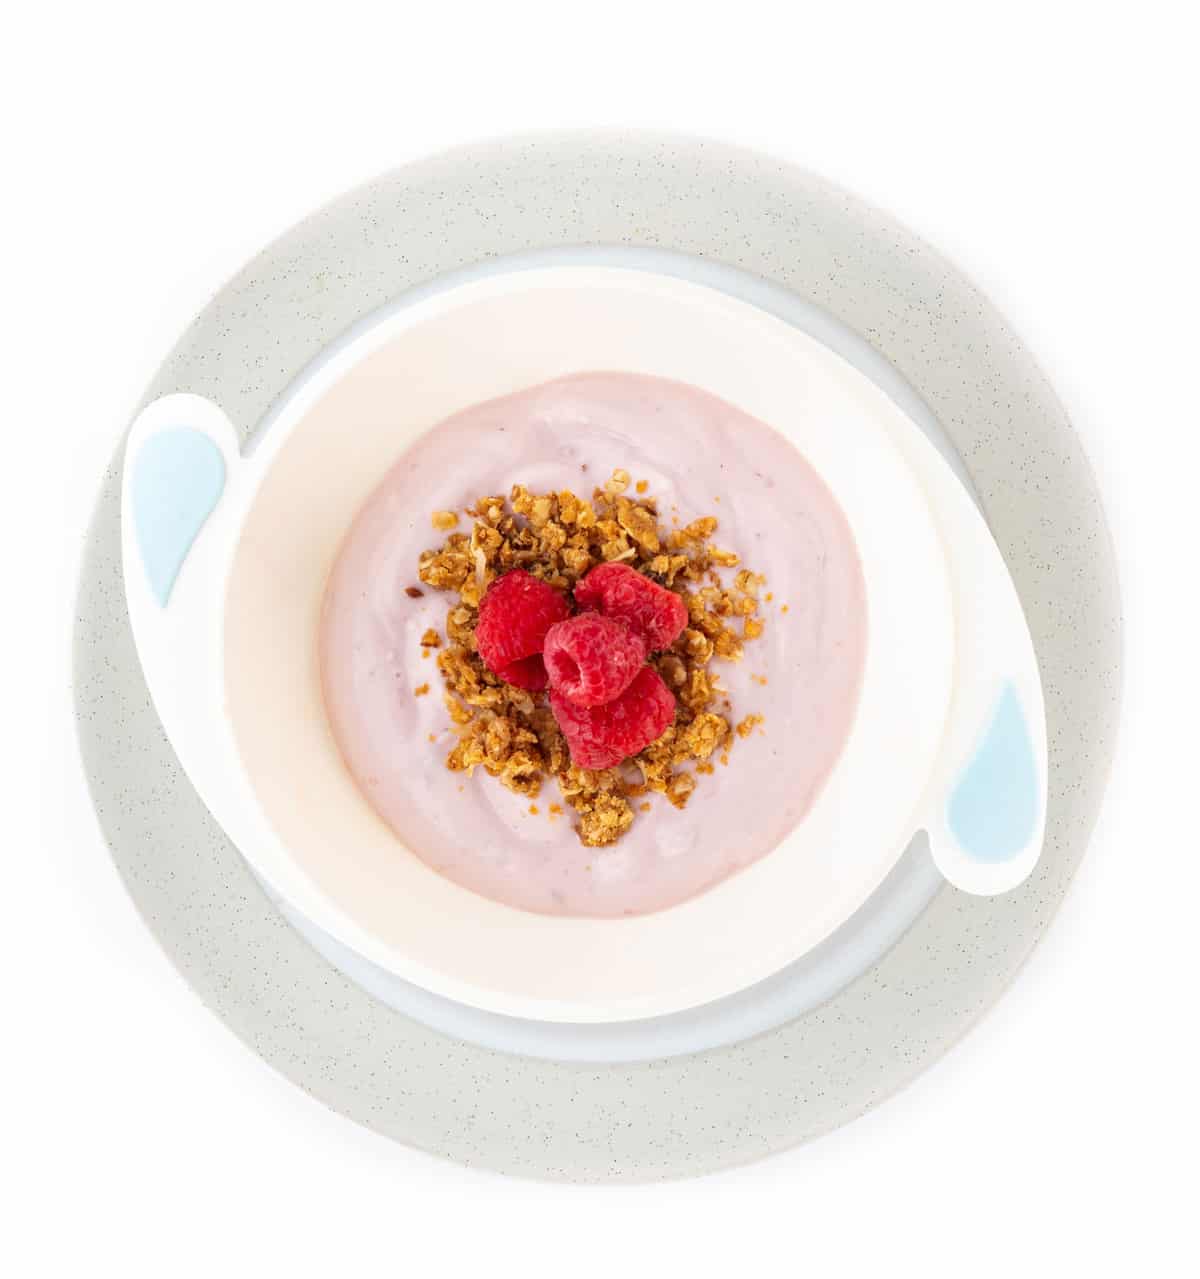 Bowl of yogurt with granola and fresh raspberries on a plate